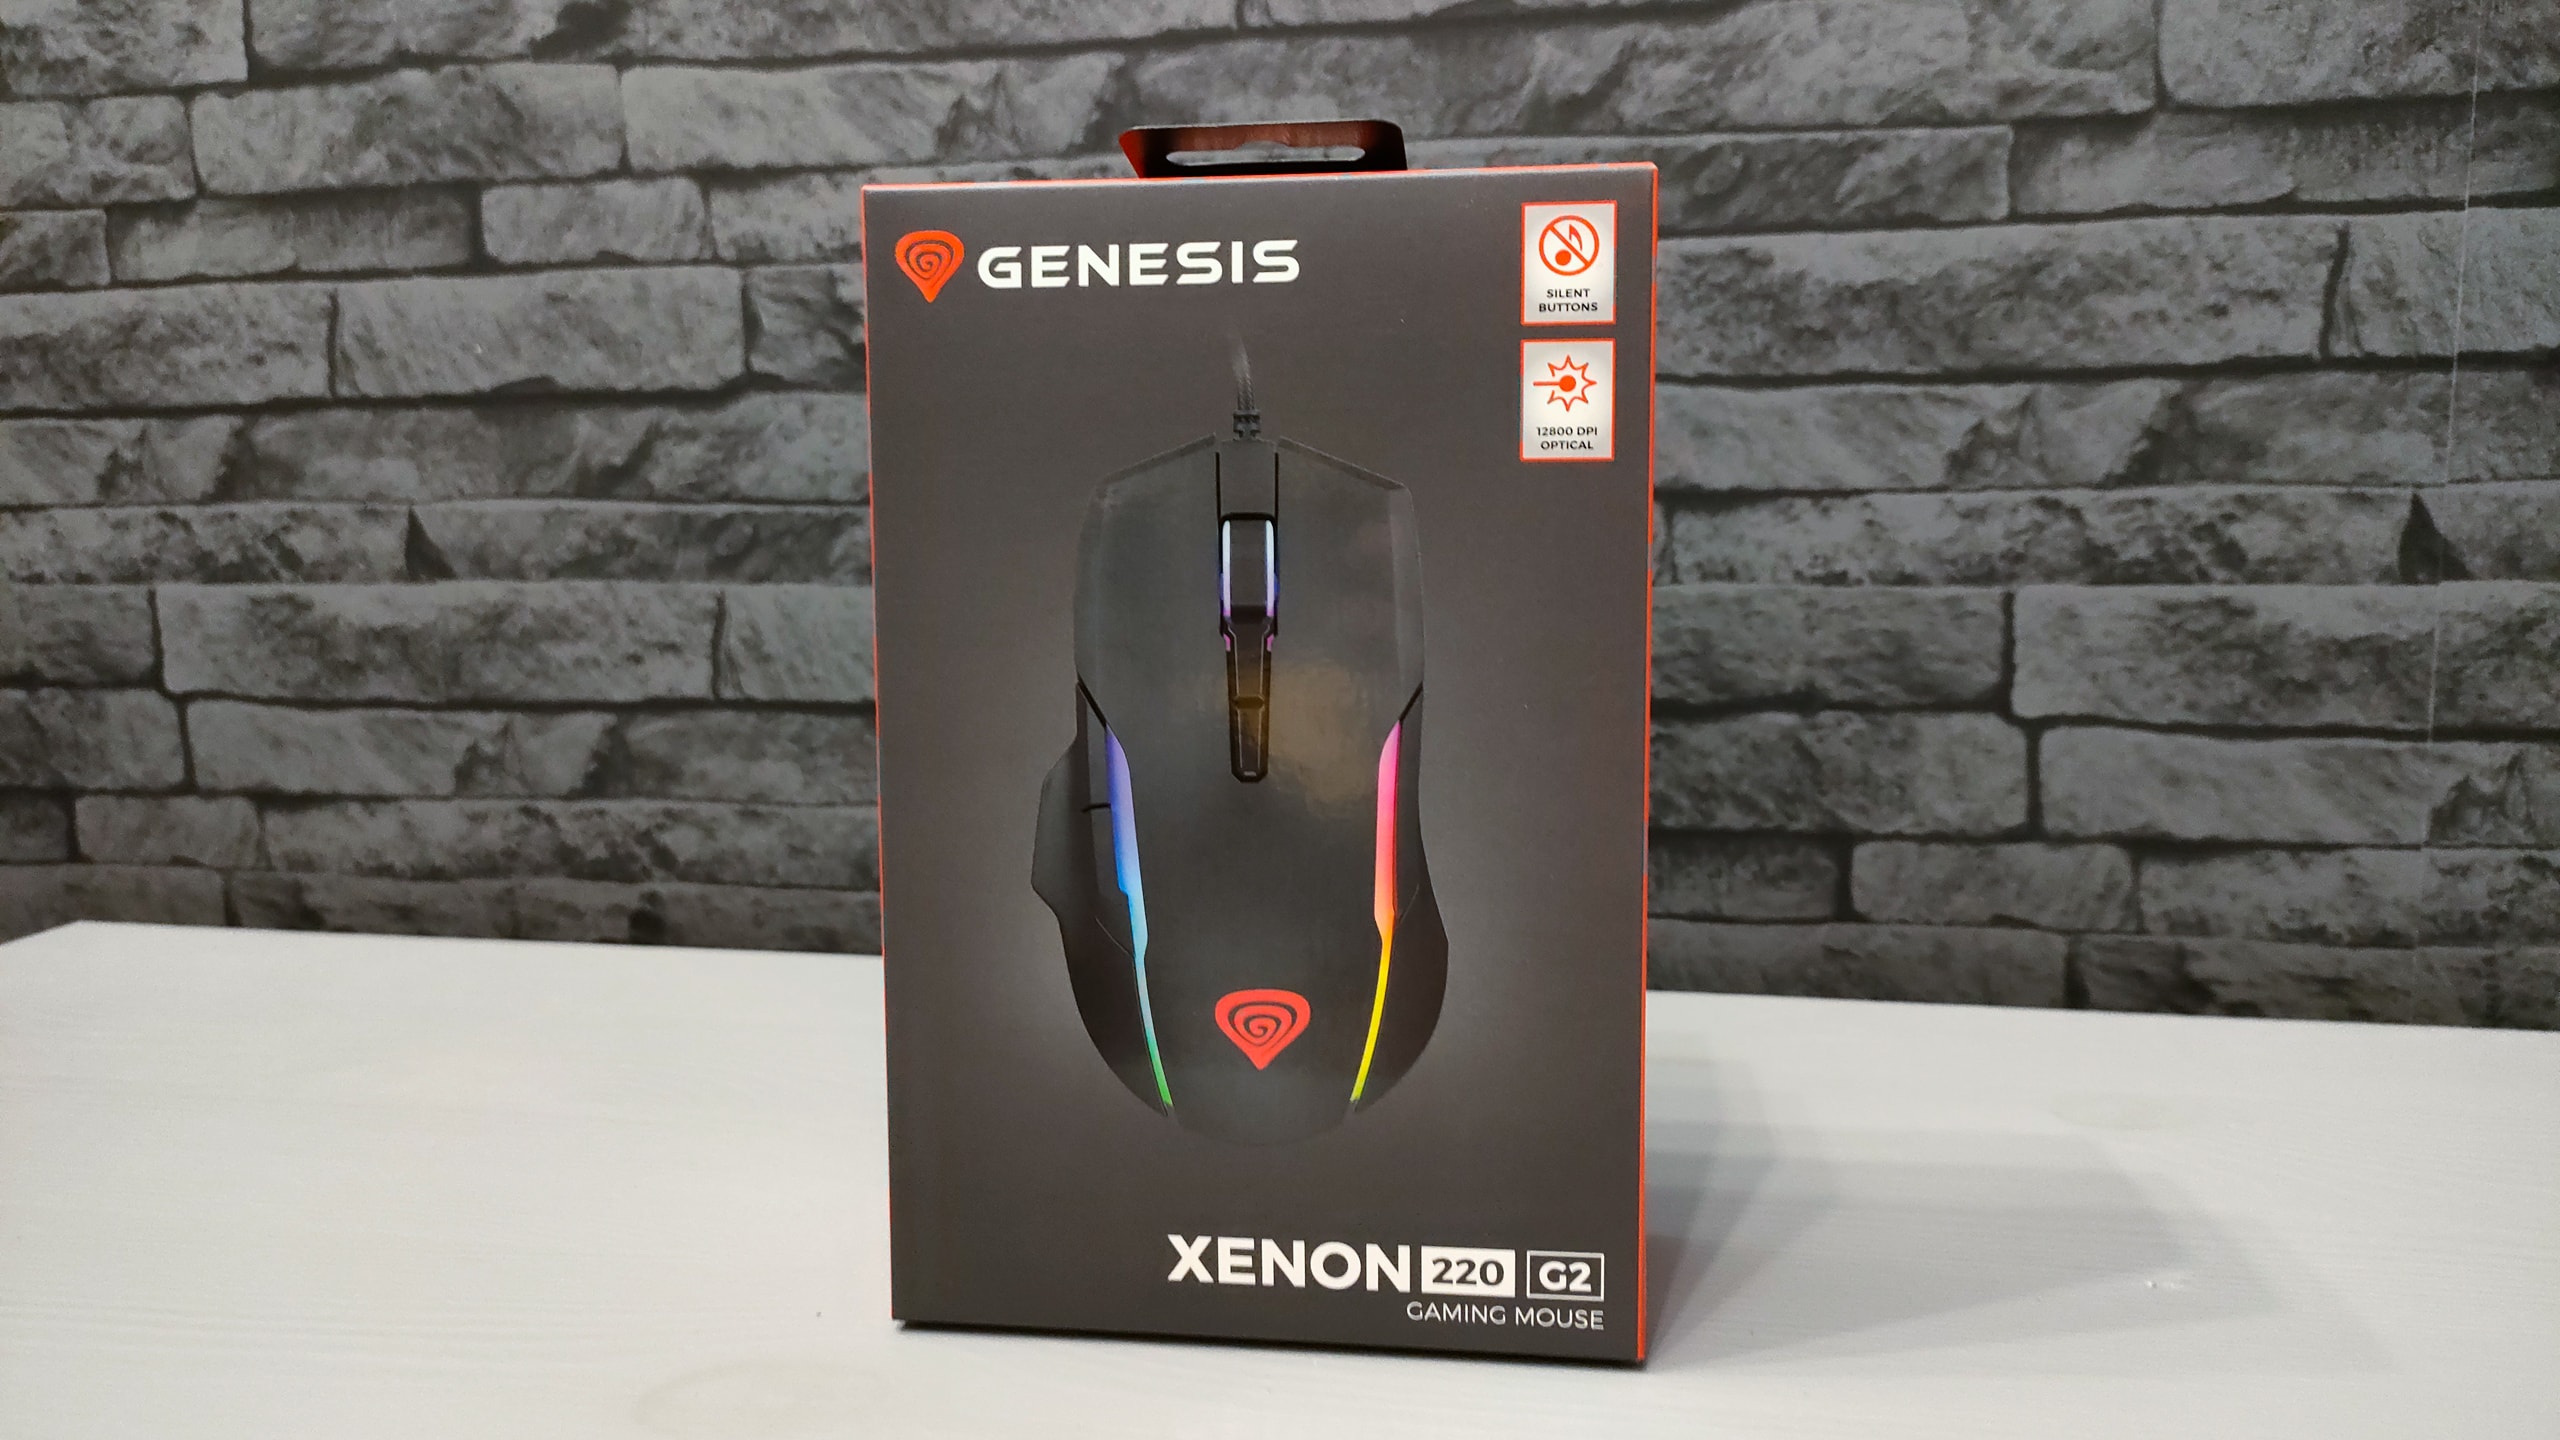 Genesis Xenon 220 G2